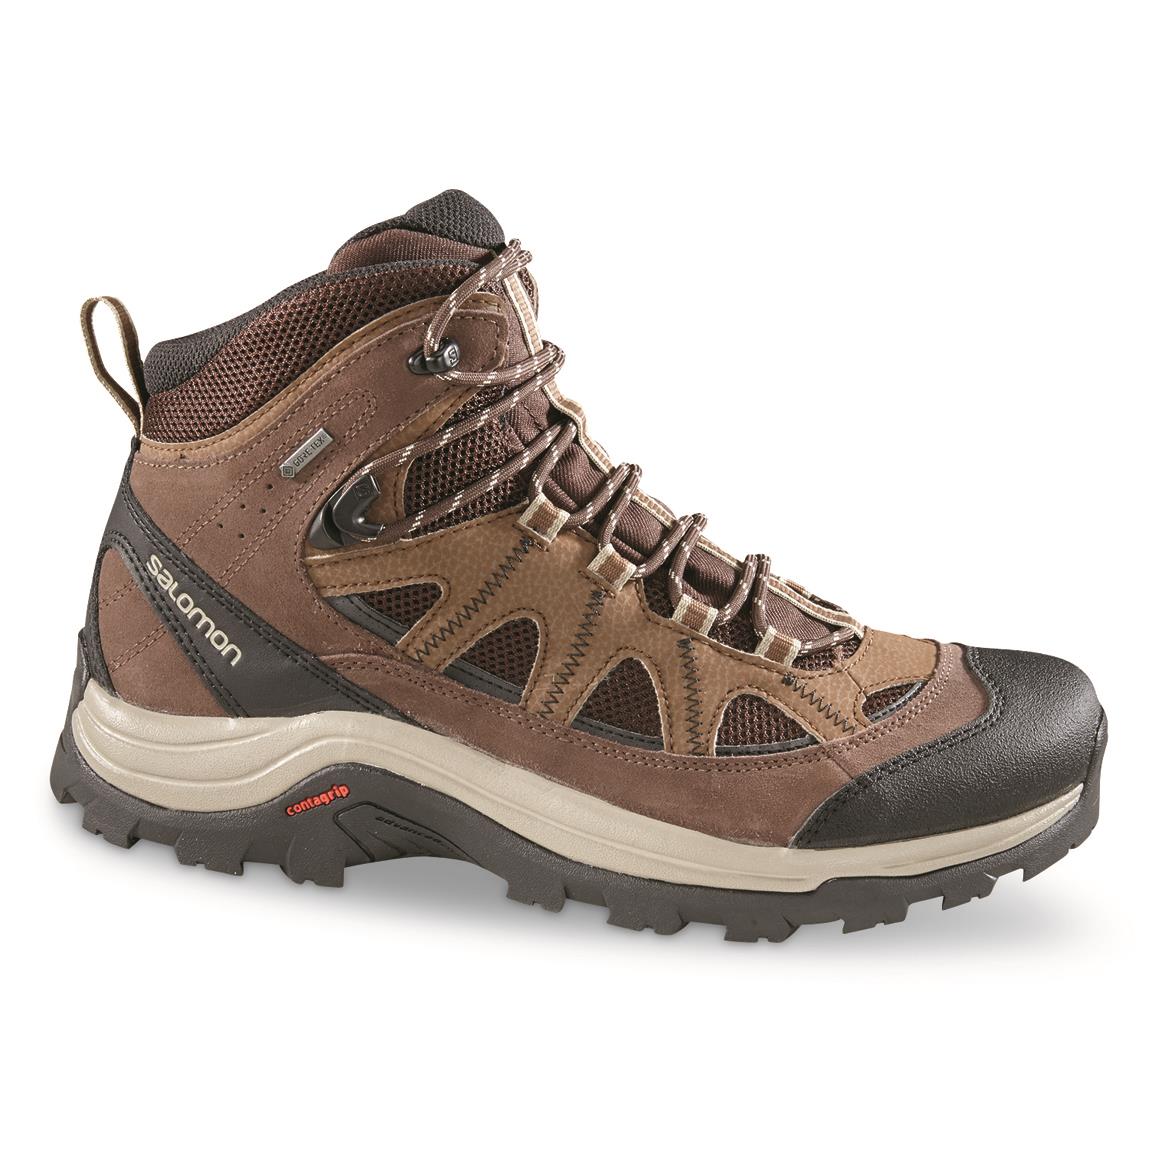 salomon men's authentic ltr gtx waterproof hiking boots